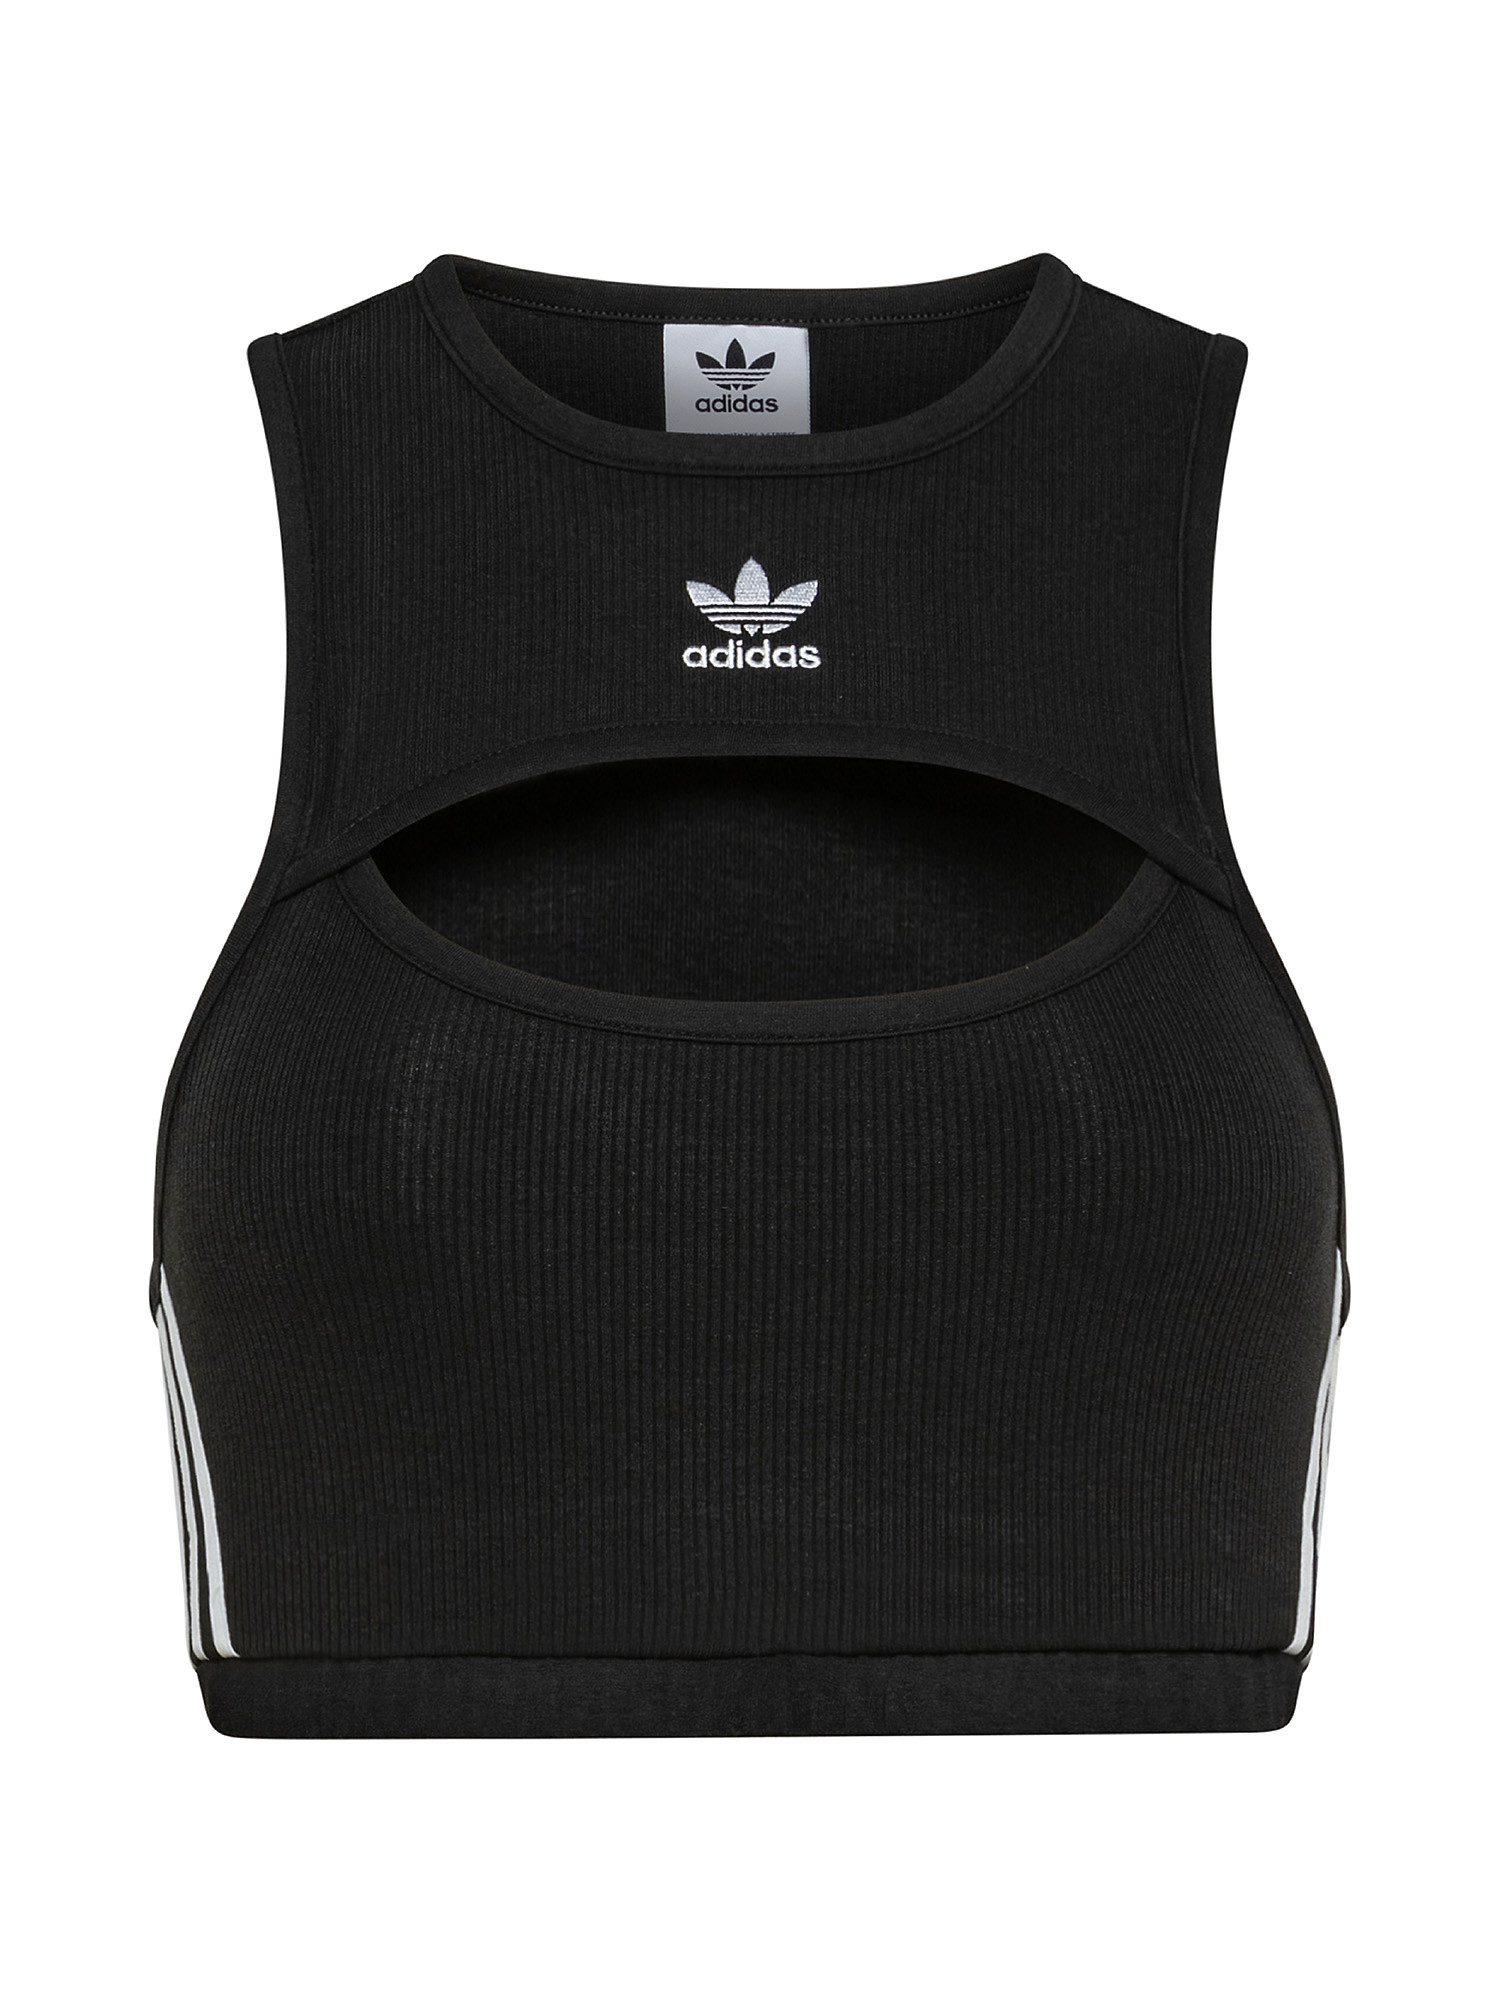 Adidas - Top adicolor, Black, large image number 0